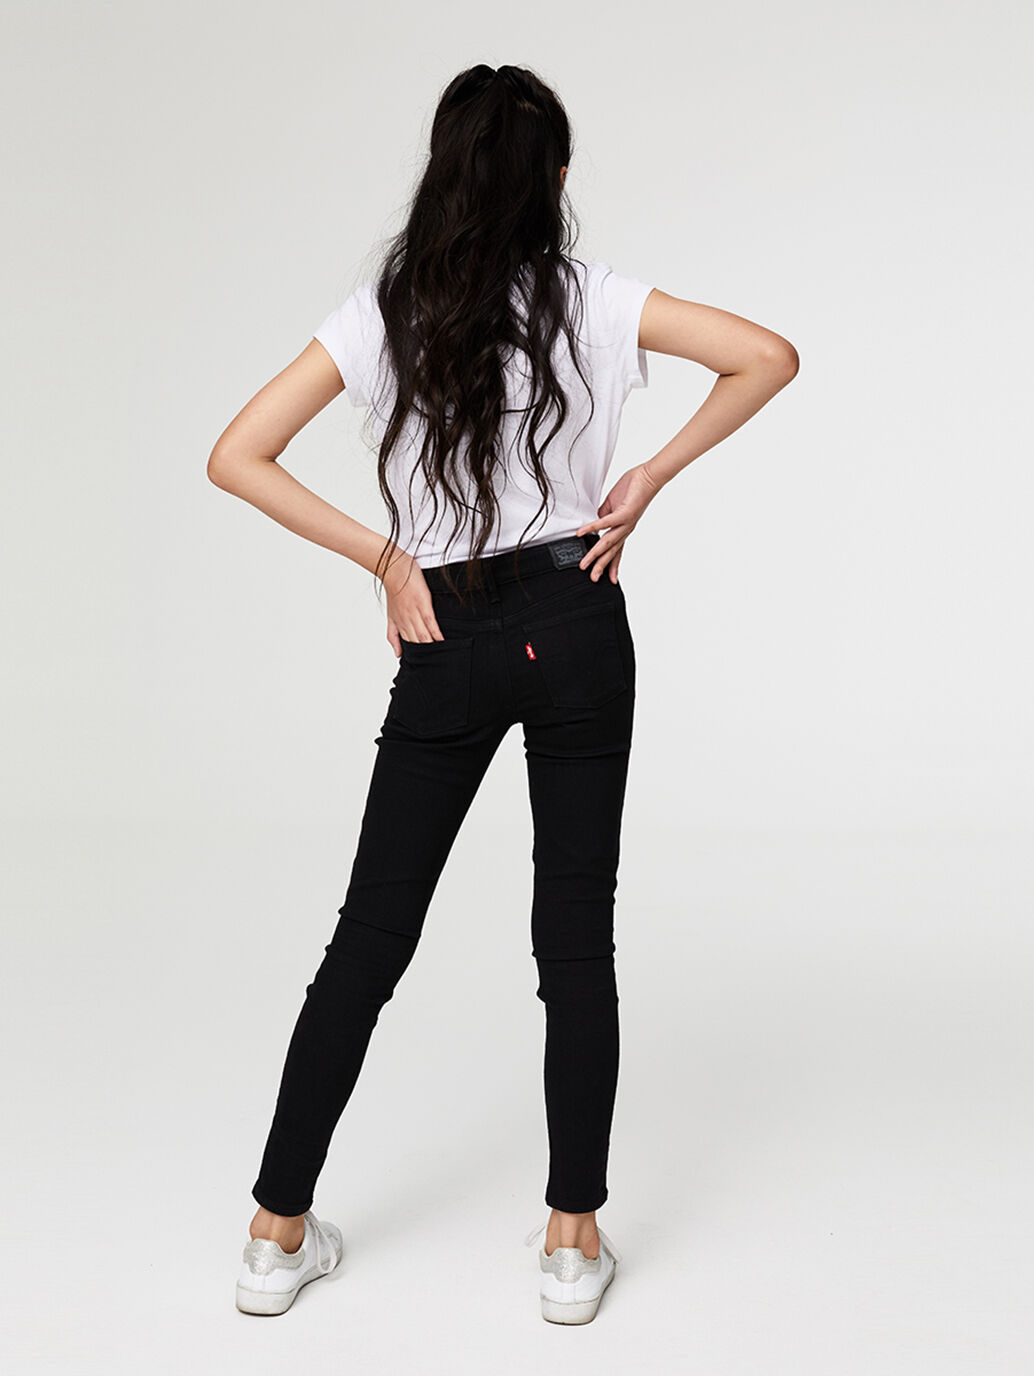 levis girls skinny jeans